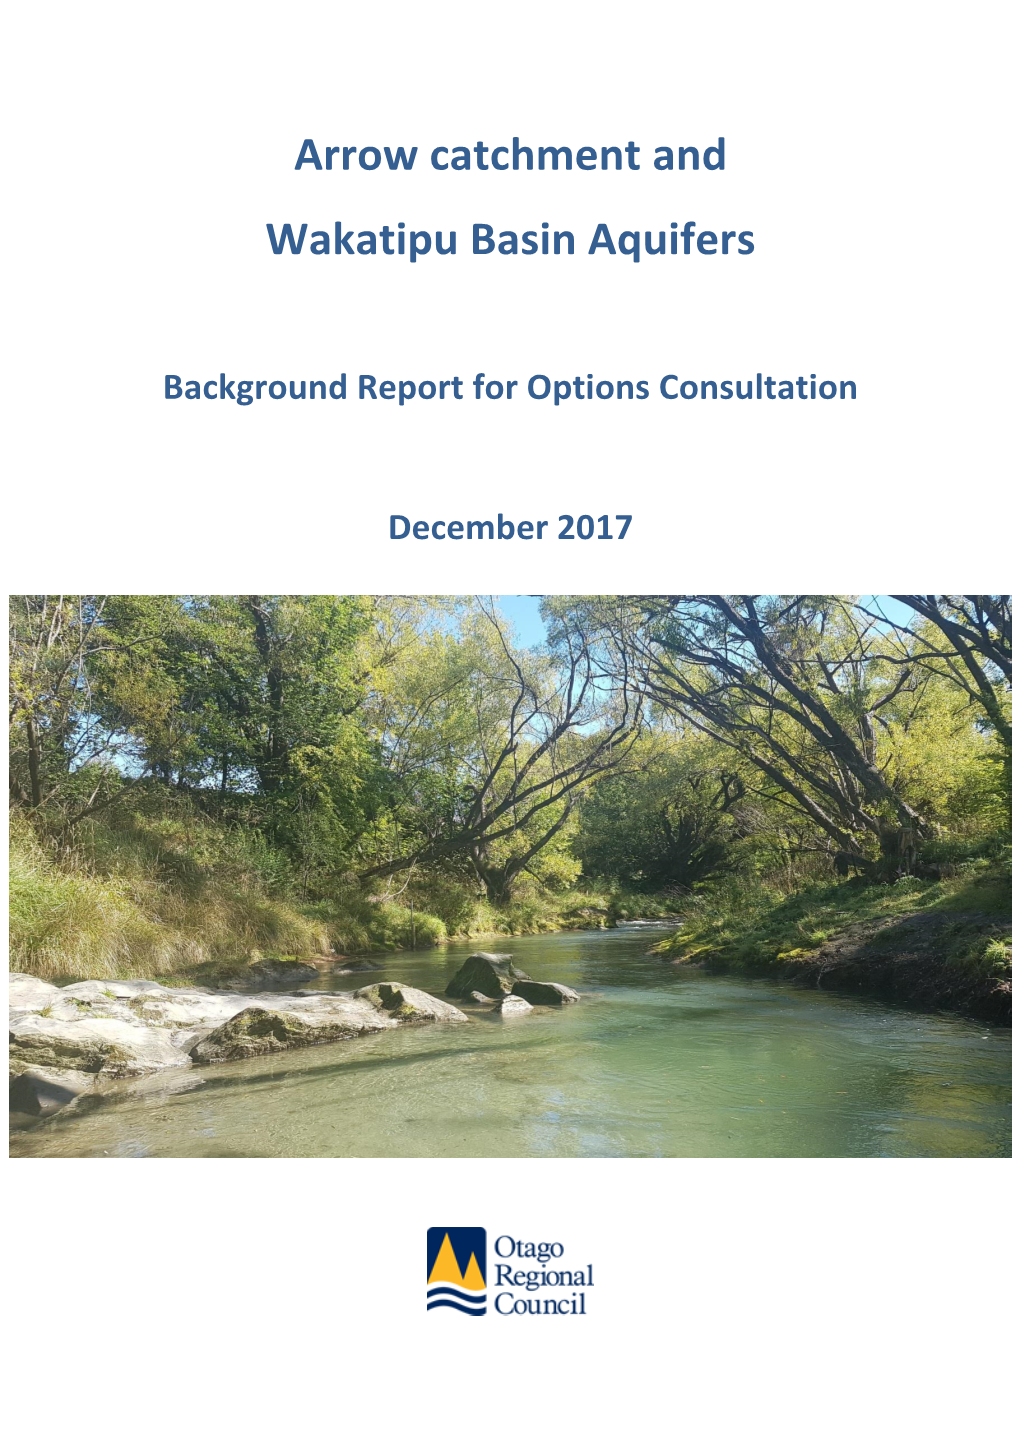 Arrow Catchment and Wakatipu Basin Aquifers